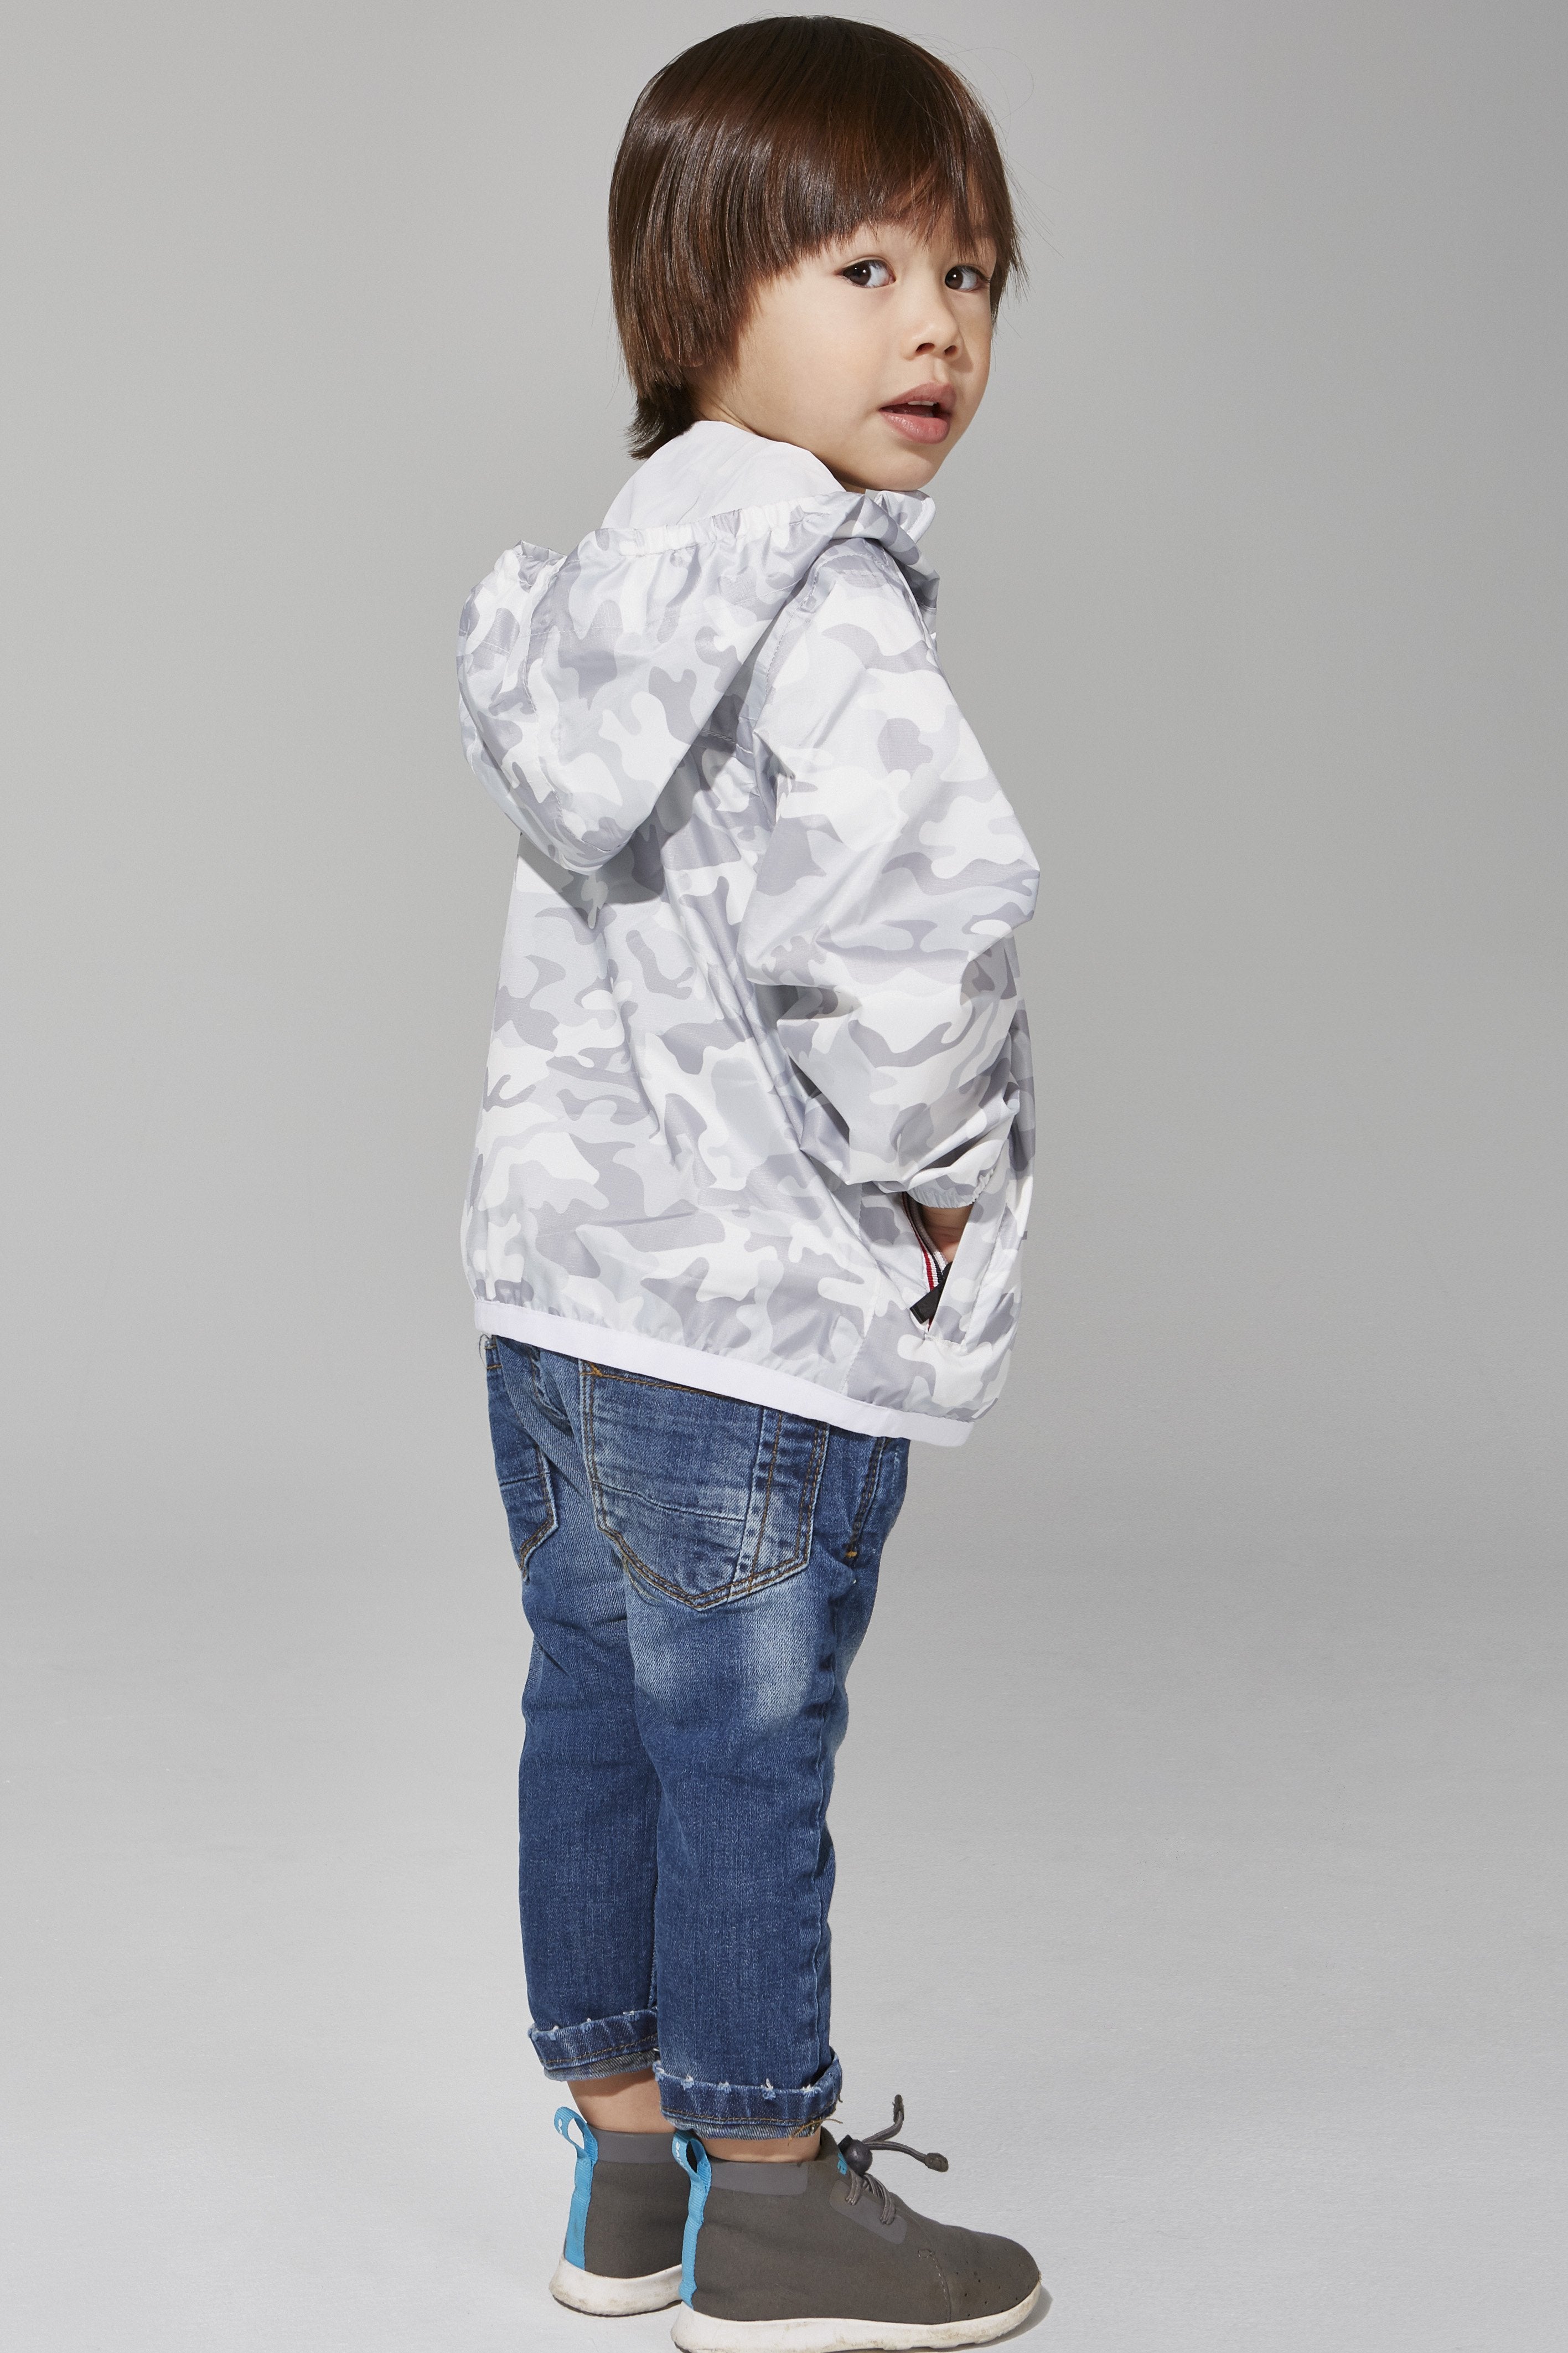 Sam Print - Kids White Camo Full Zip Light Packable Rain Jacket - O8lifestyle.